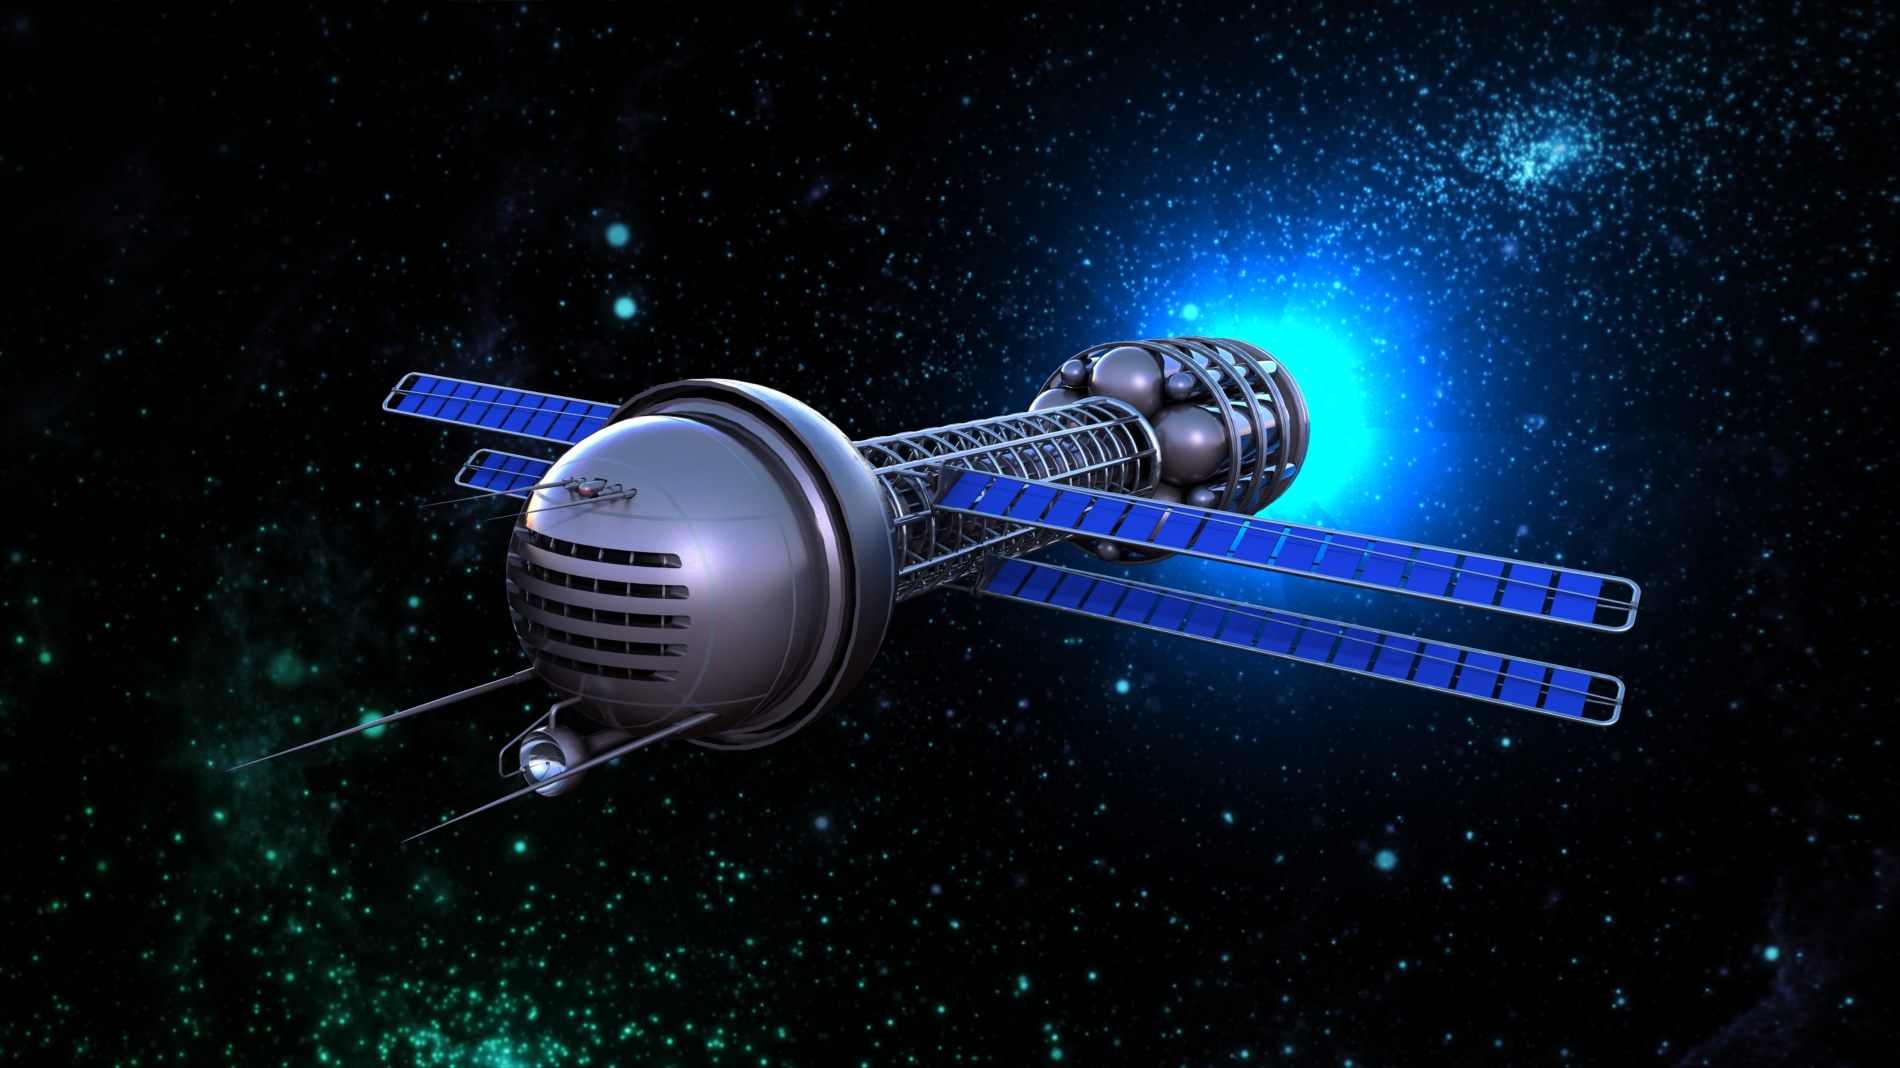 Interstellair太空船科幻